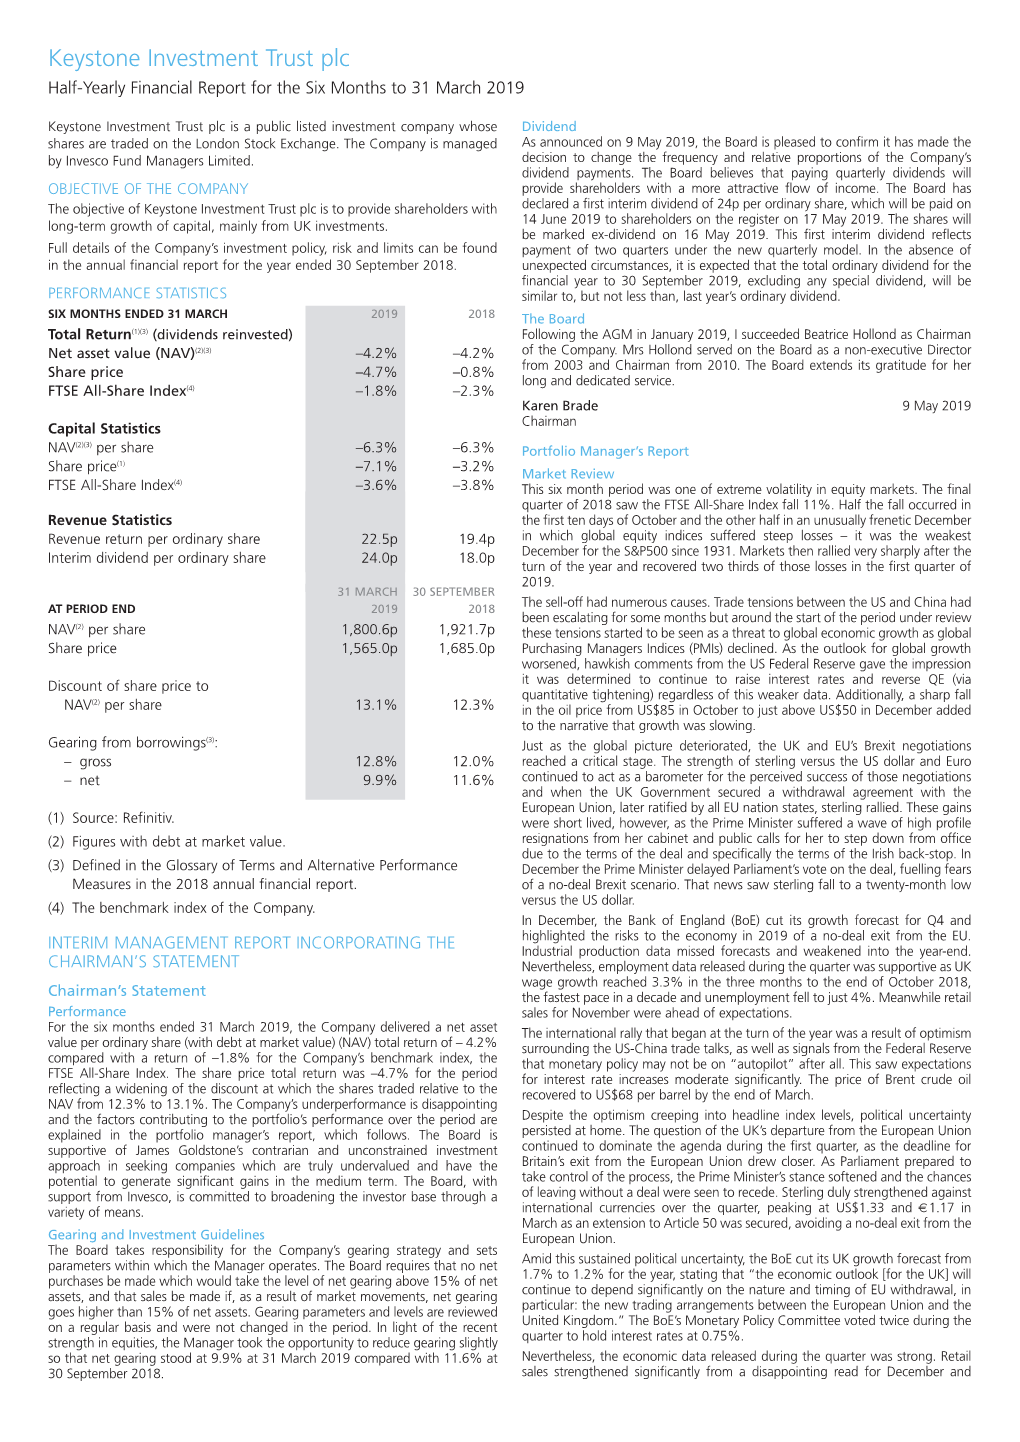 Keystone Investment Trust Half Year Report